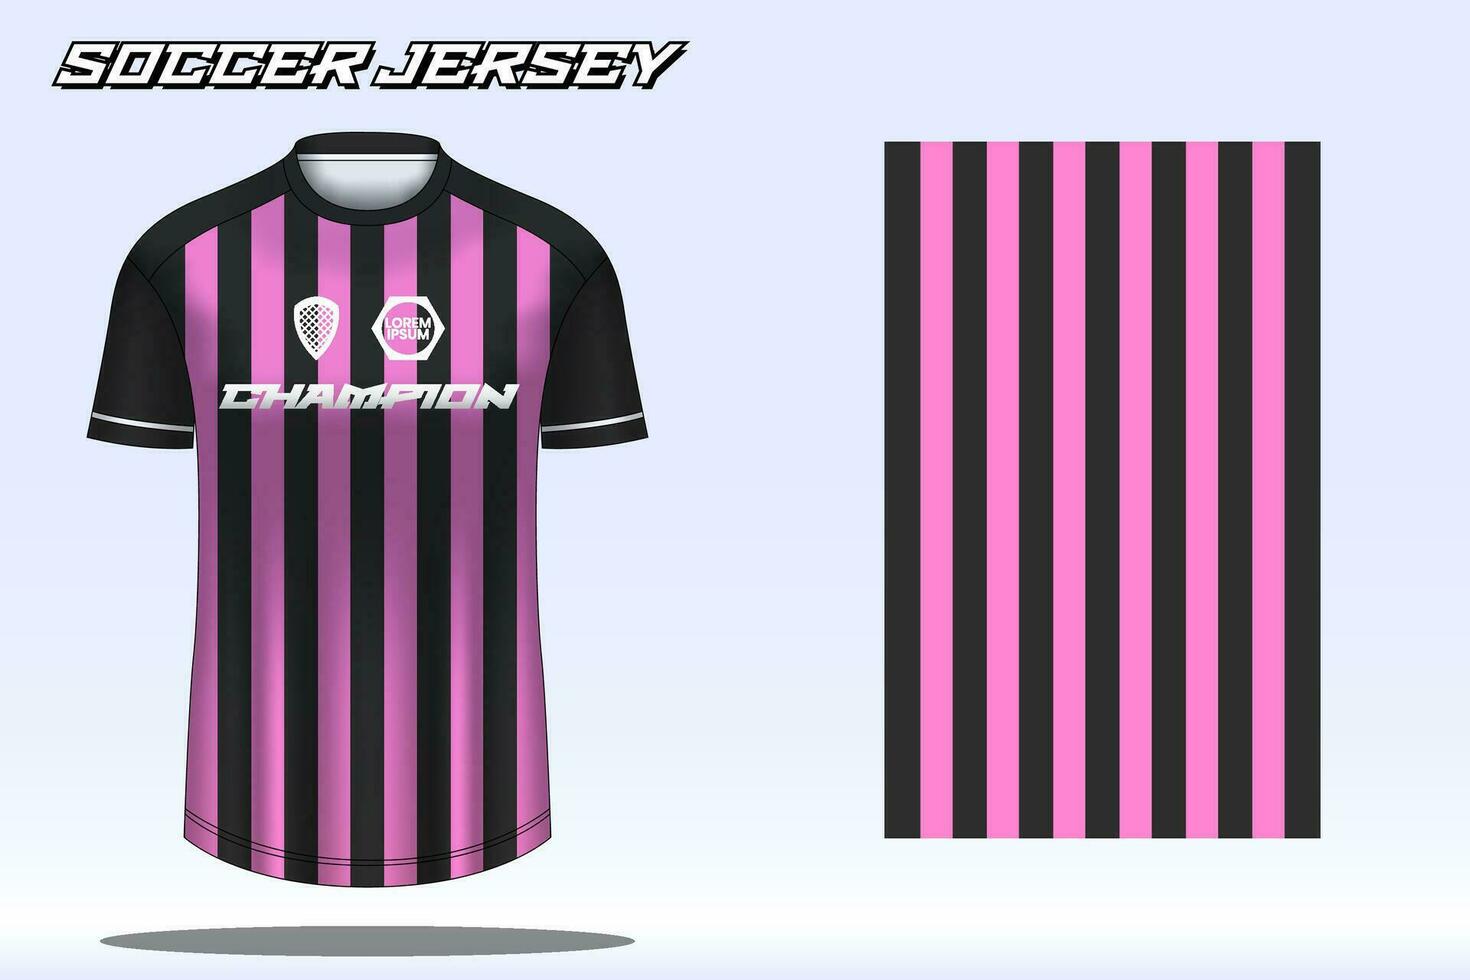 voetbal Jersey mockup voor Amerikaans voetbal club. vector sublimatie sport- kleding ontwerp. uniform voorkant visie Sjablonen Amerikaans voetbal Jersey.